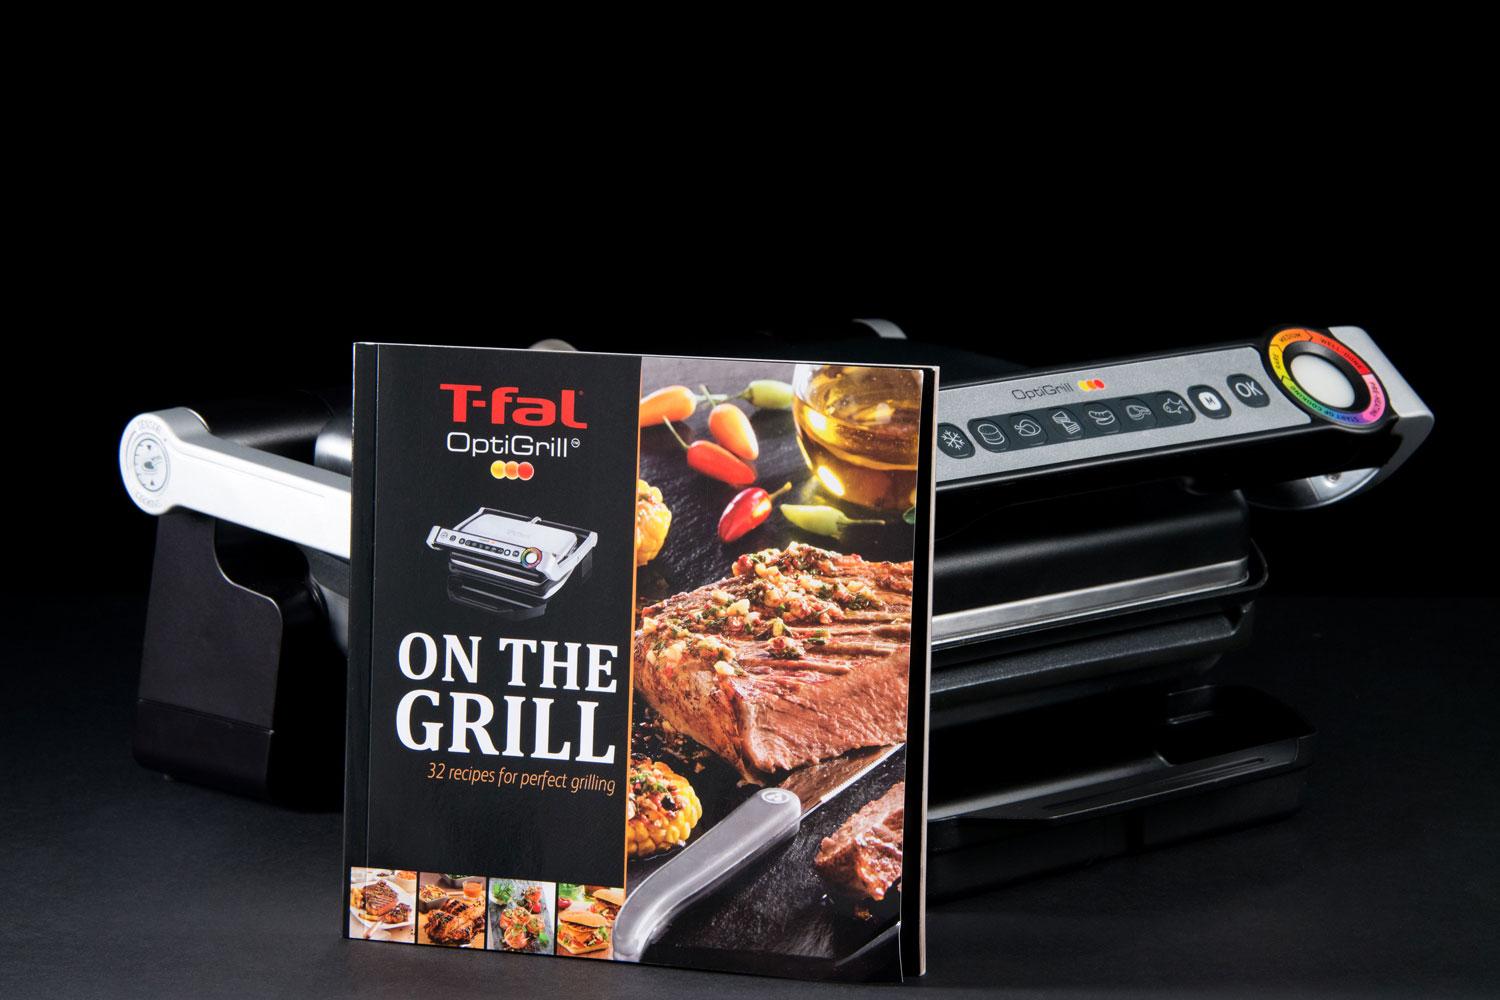 https://www.digitaltrends.com/wp-content/uploads/2013/11/T-fal-Optigrill-with-T-fal-cookbook.jpg?fit=500%2C334&p=1